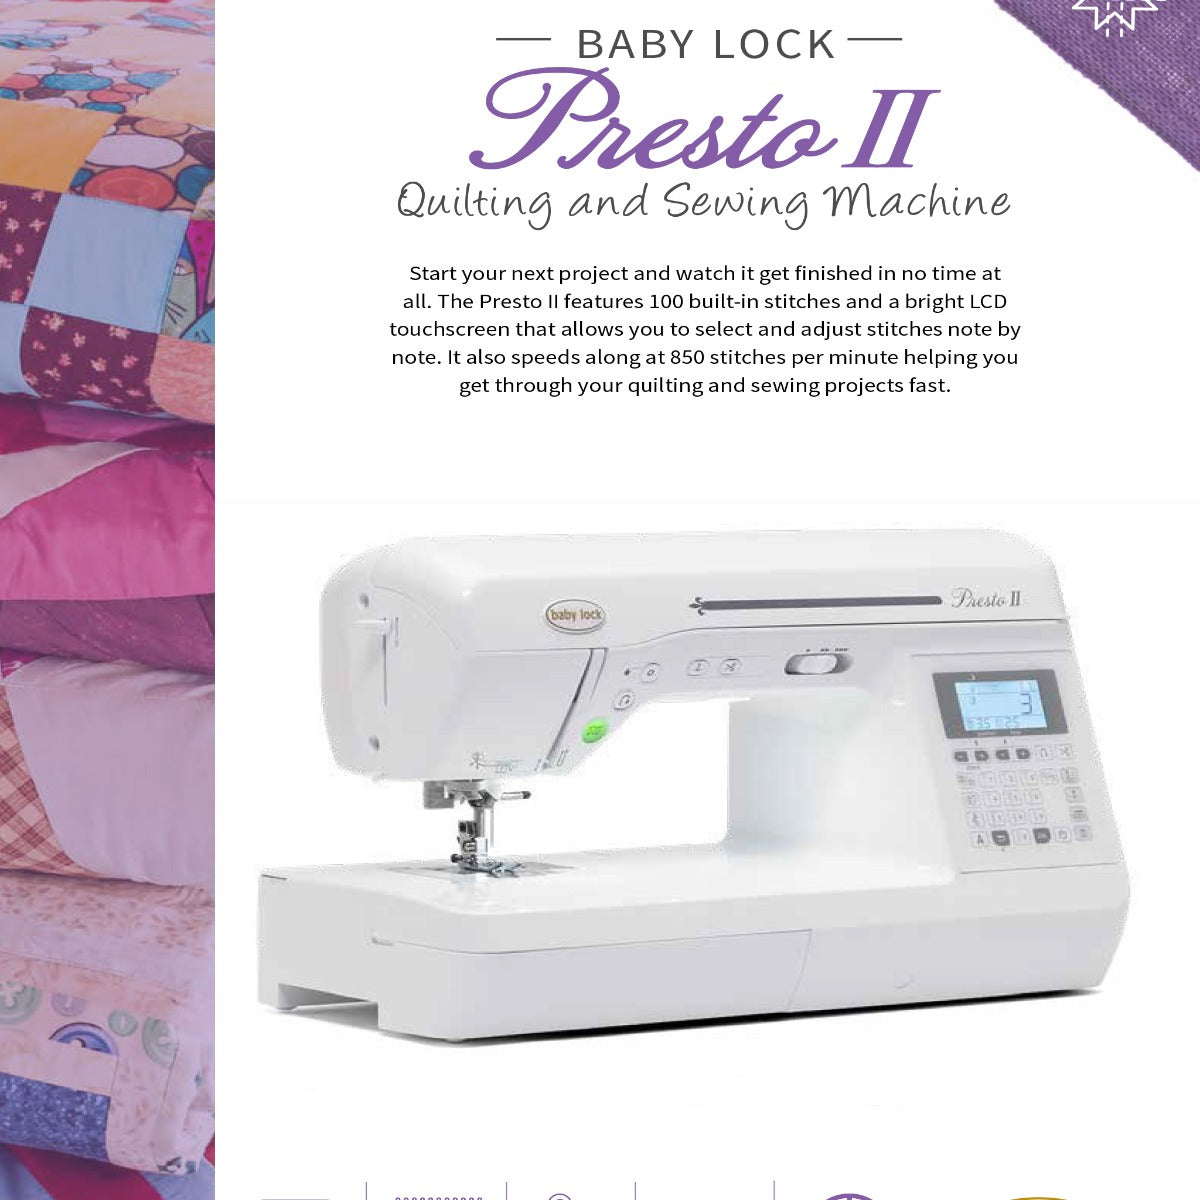 Baby Lock Presto 2 Sewing and Quilting Machine